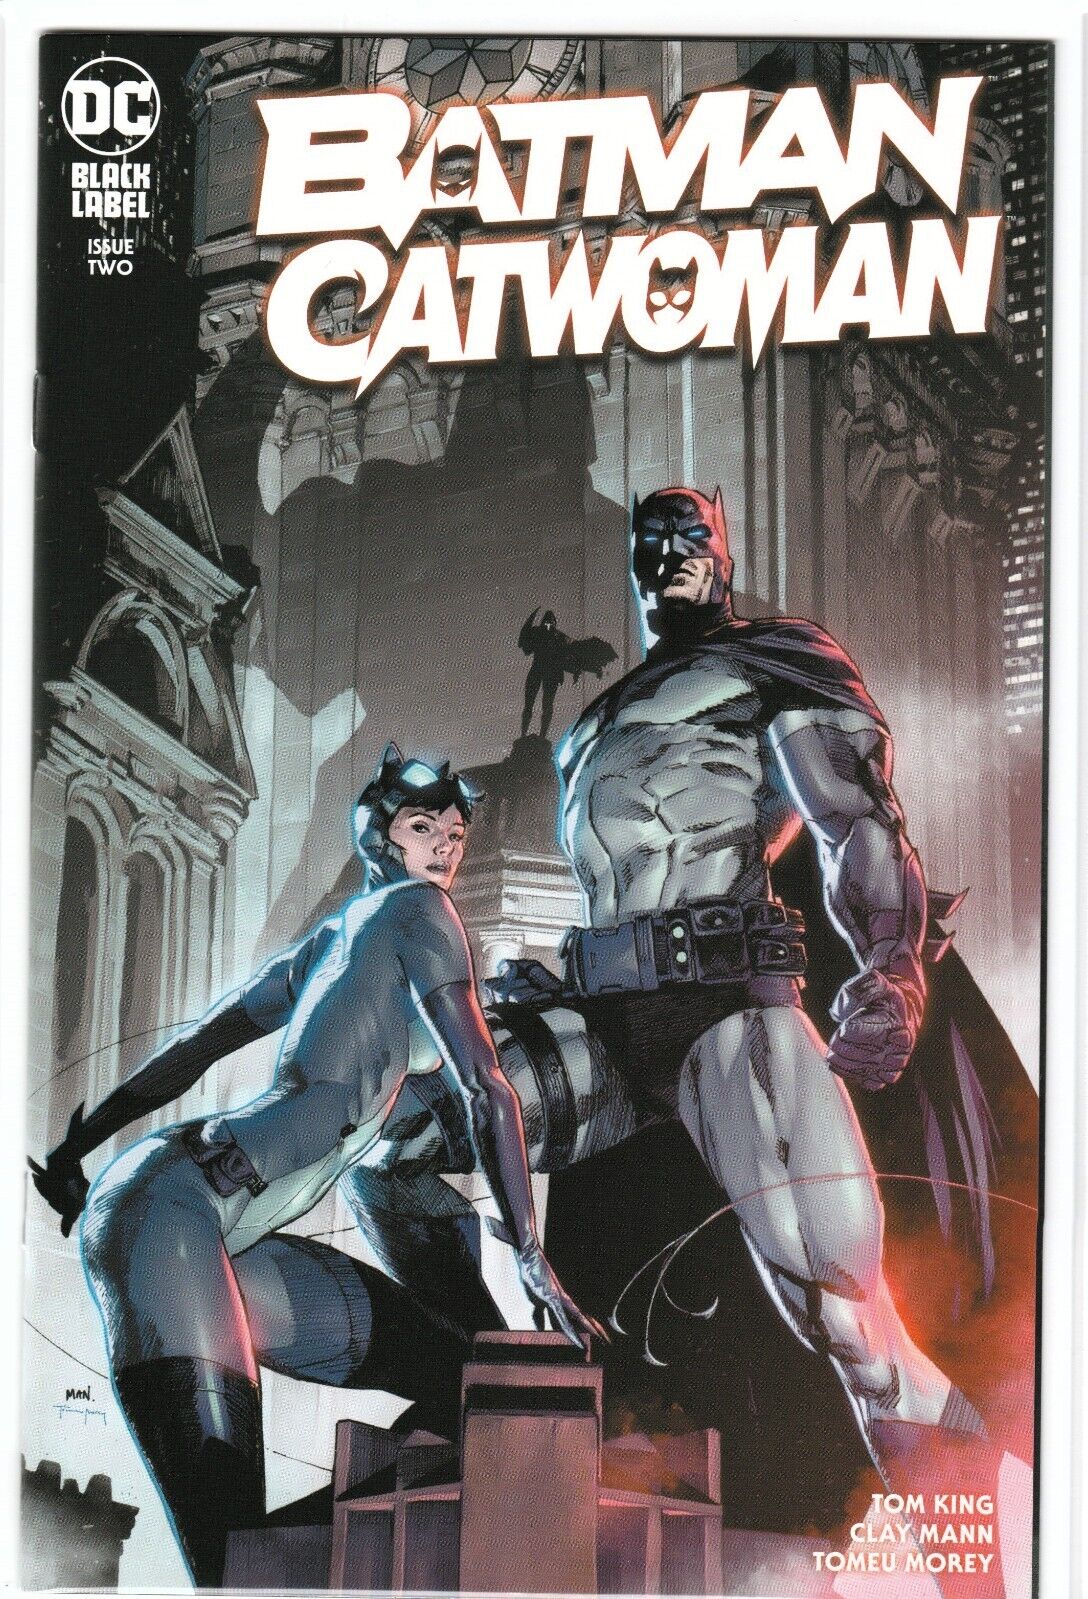 BATMAN CATWOMAN #2 (2021 DC) CLAY MANN SPOT VARNISH CARDSTOCK VARIANT ~UNREAD NM